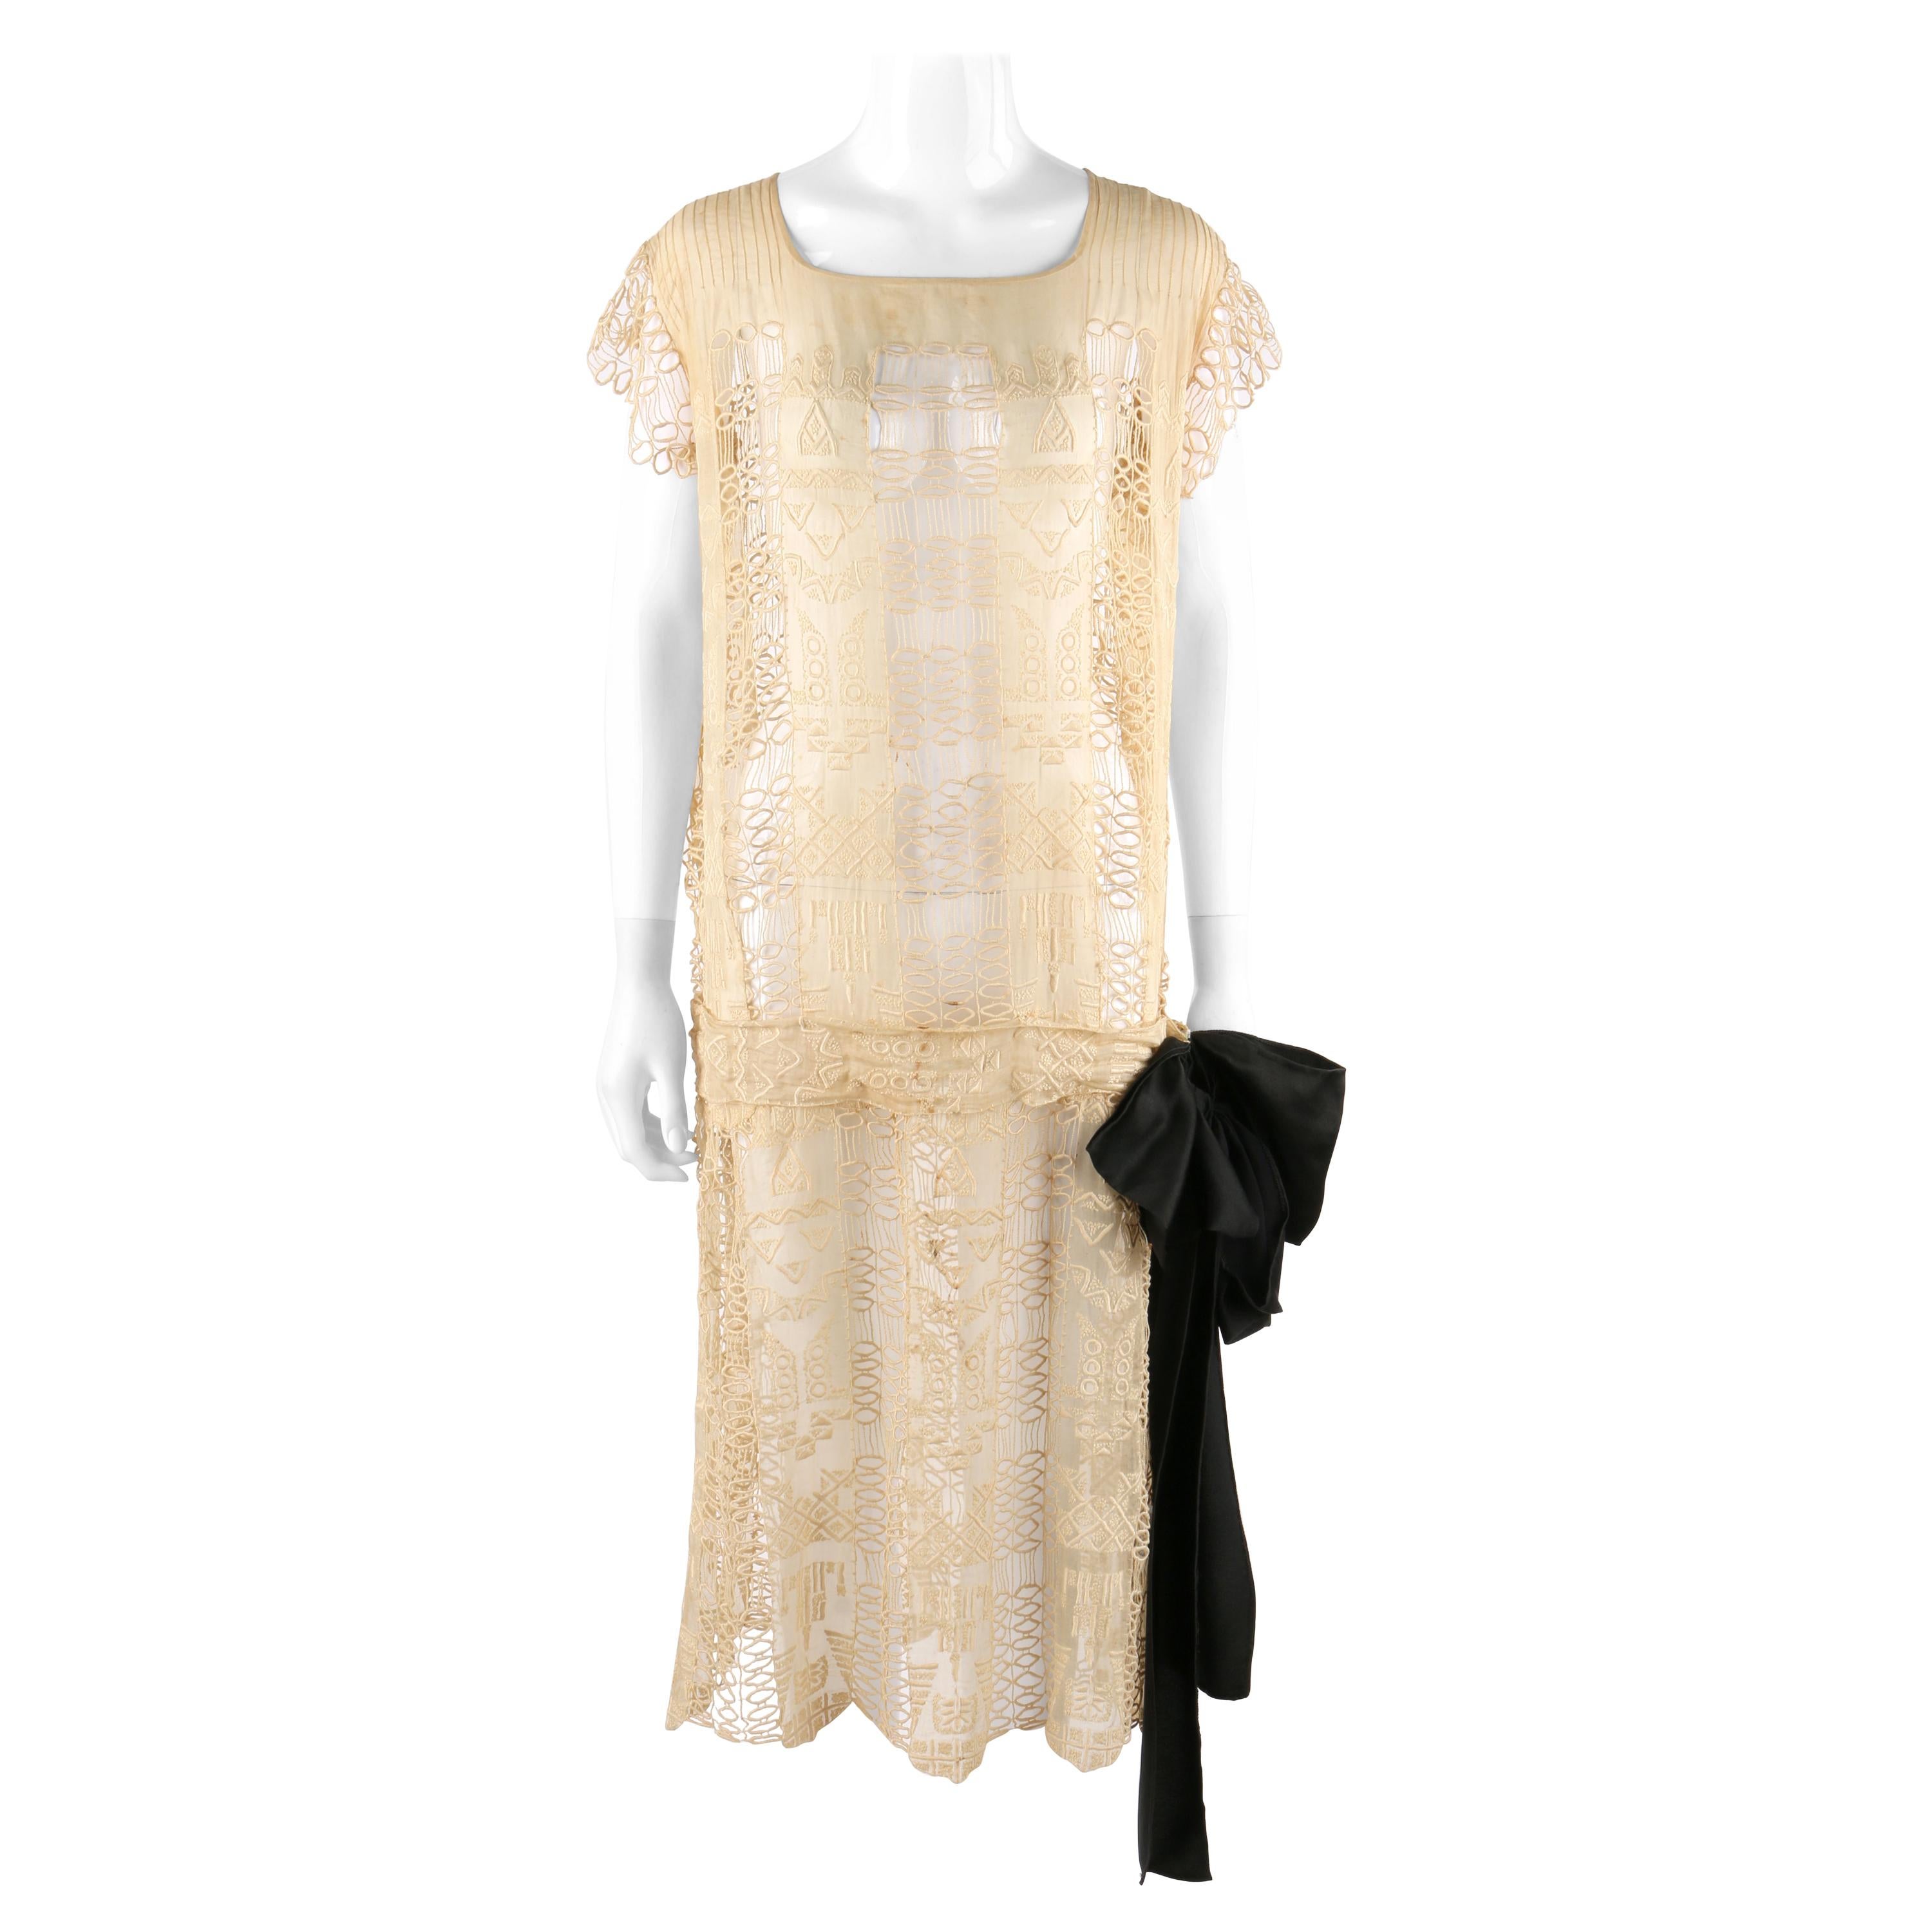 VINTAGE c.1920’s Drop Waist Belted Black Bow Ivory Lace Sheer Cotton Shift Dress